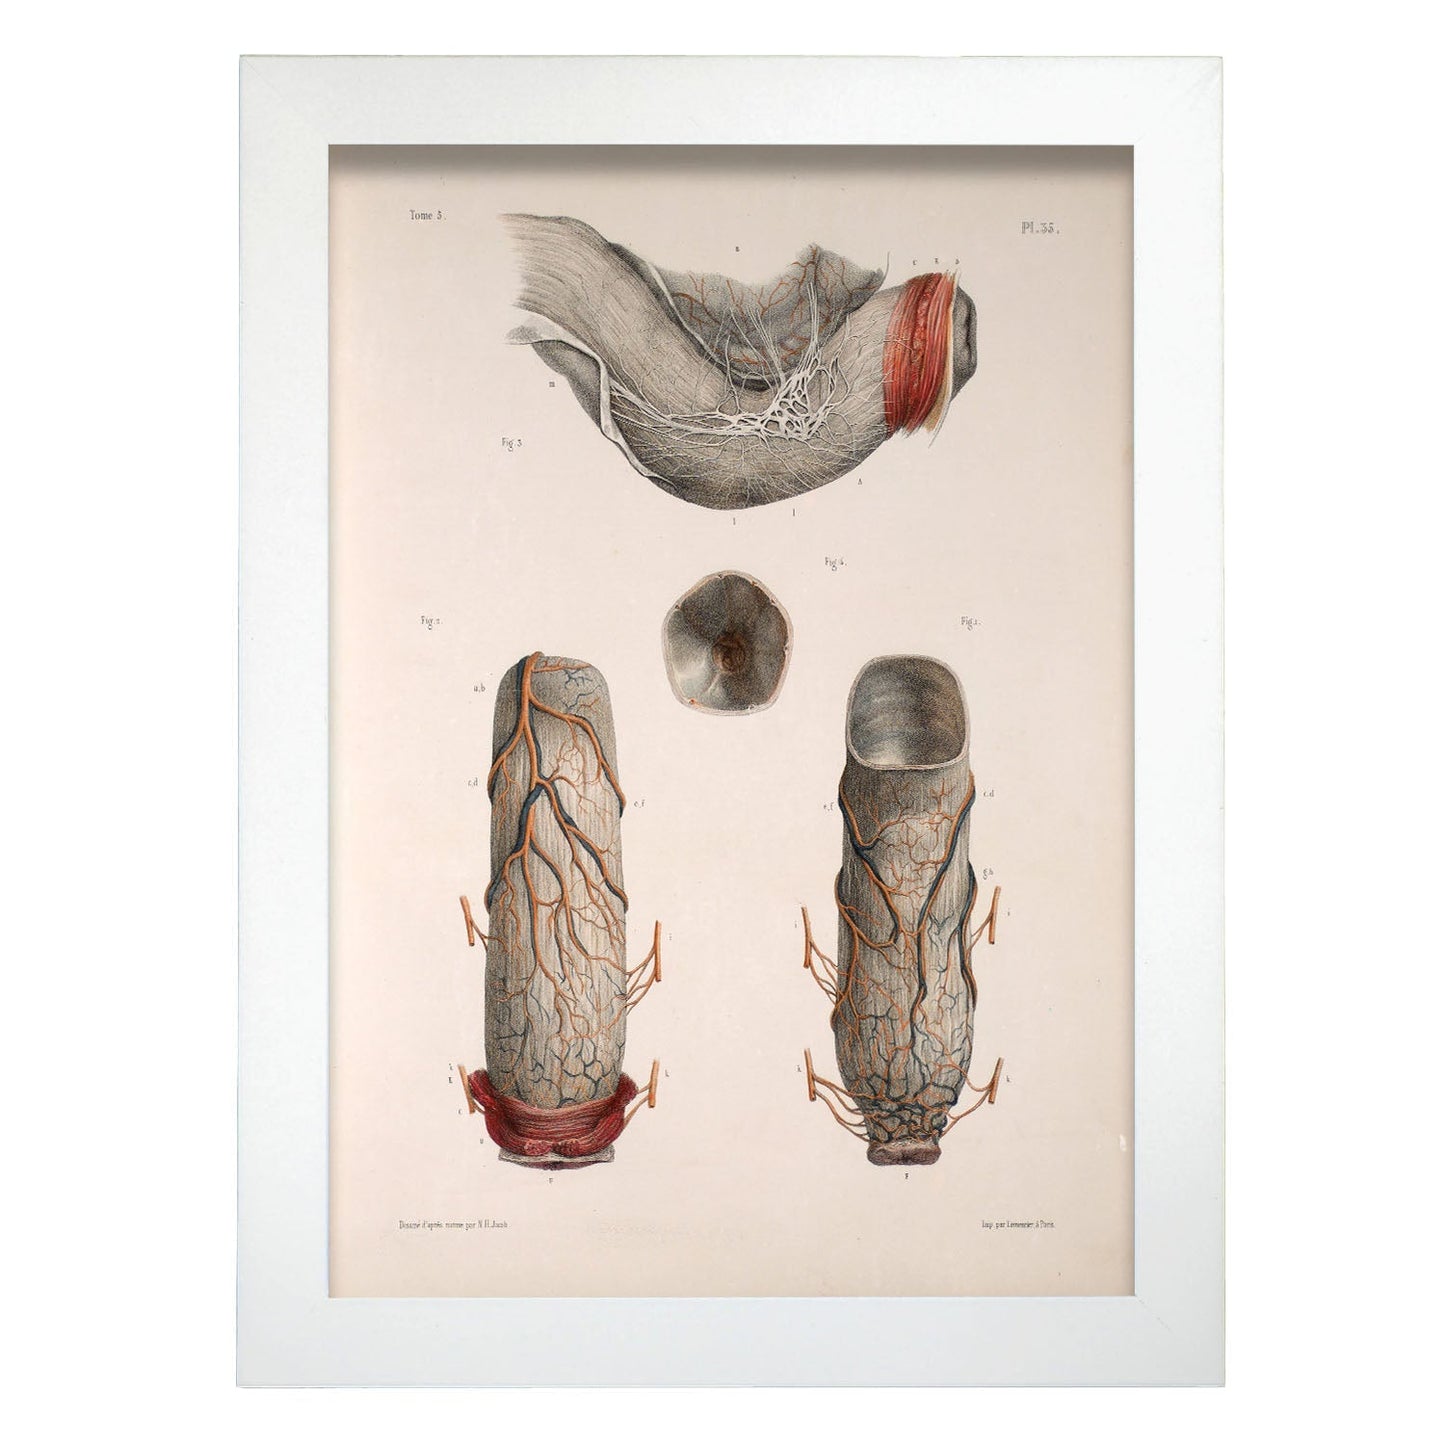 Large intestine, rectum and anus-Artwork-Nacnic-A4-Marco Blanco-Nacnic Estudio SL